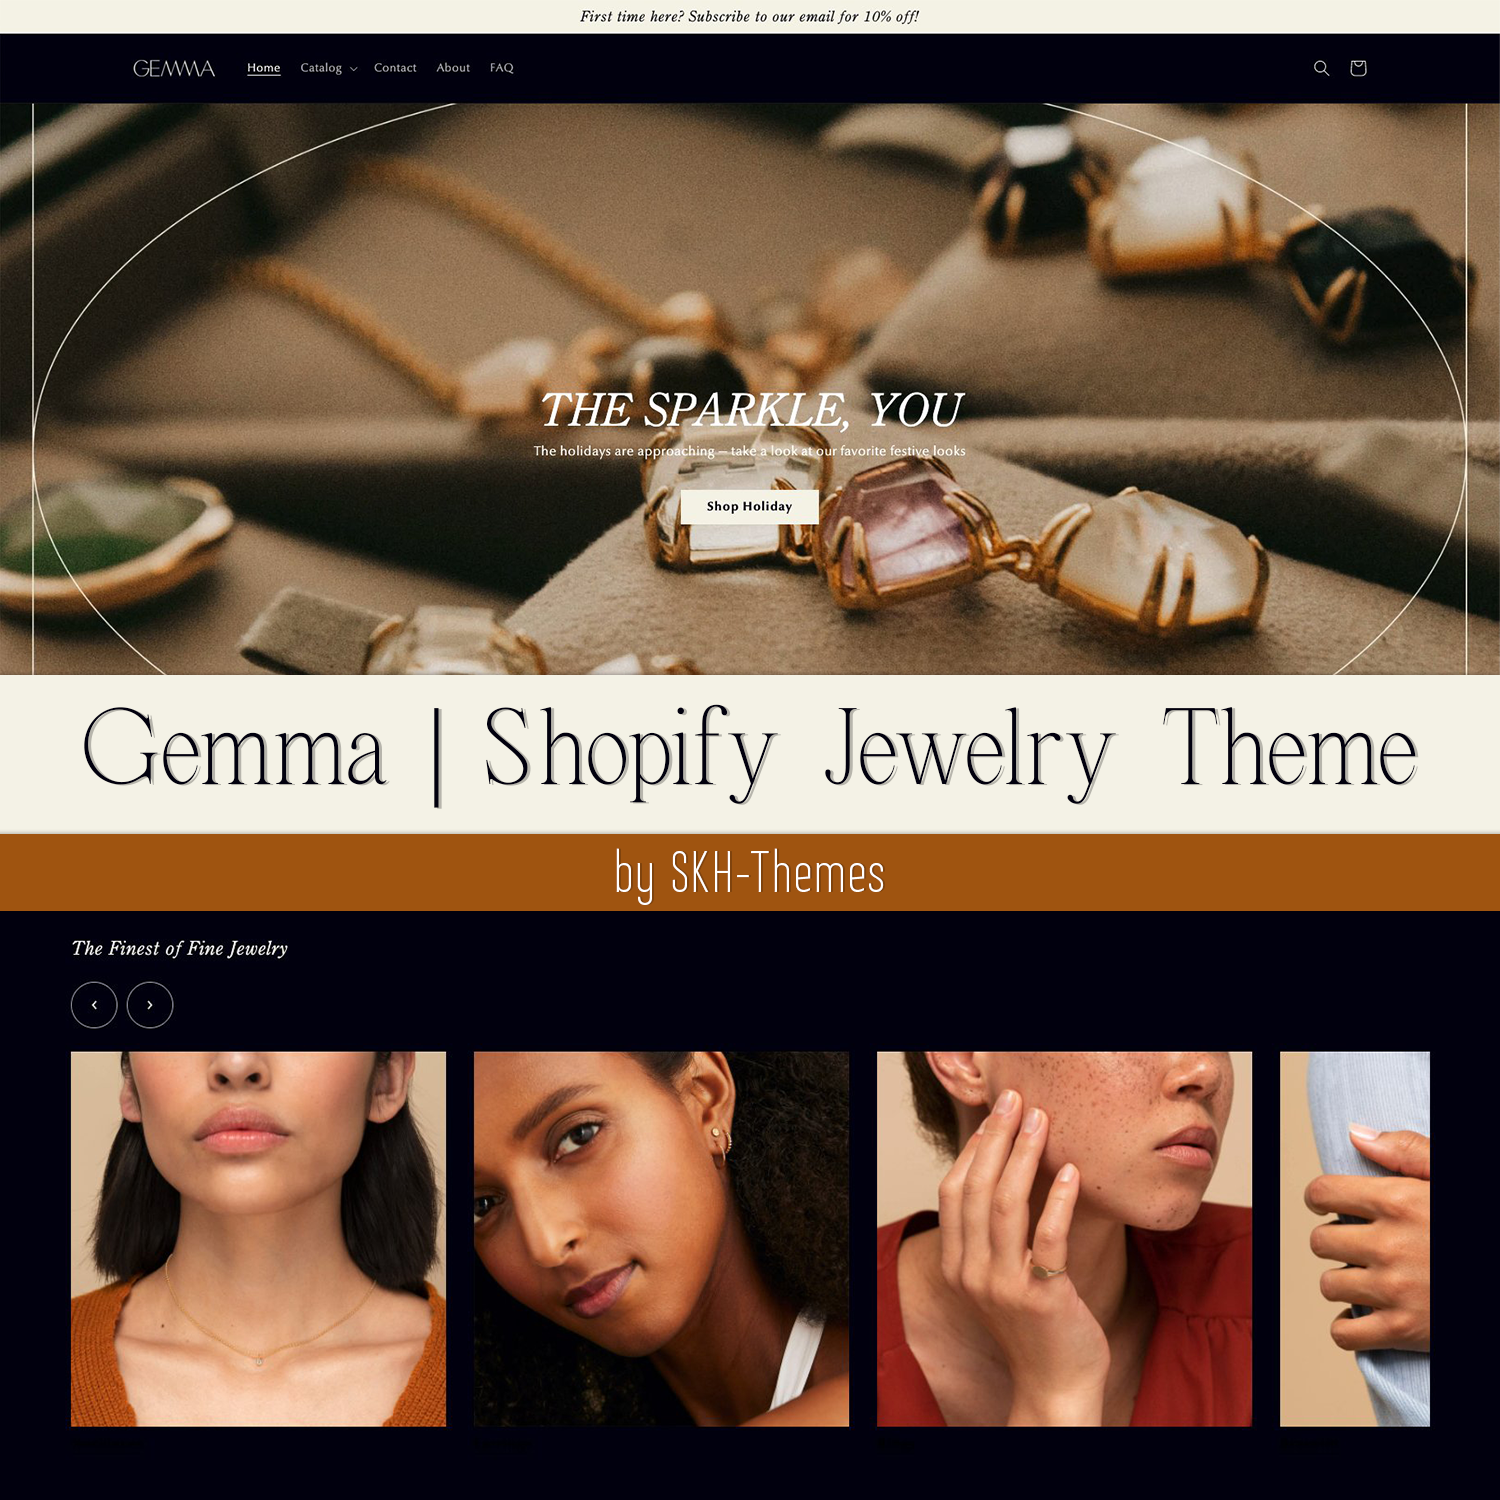 Preview gemma shopify jewelry theme.